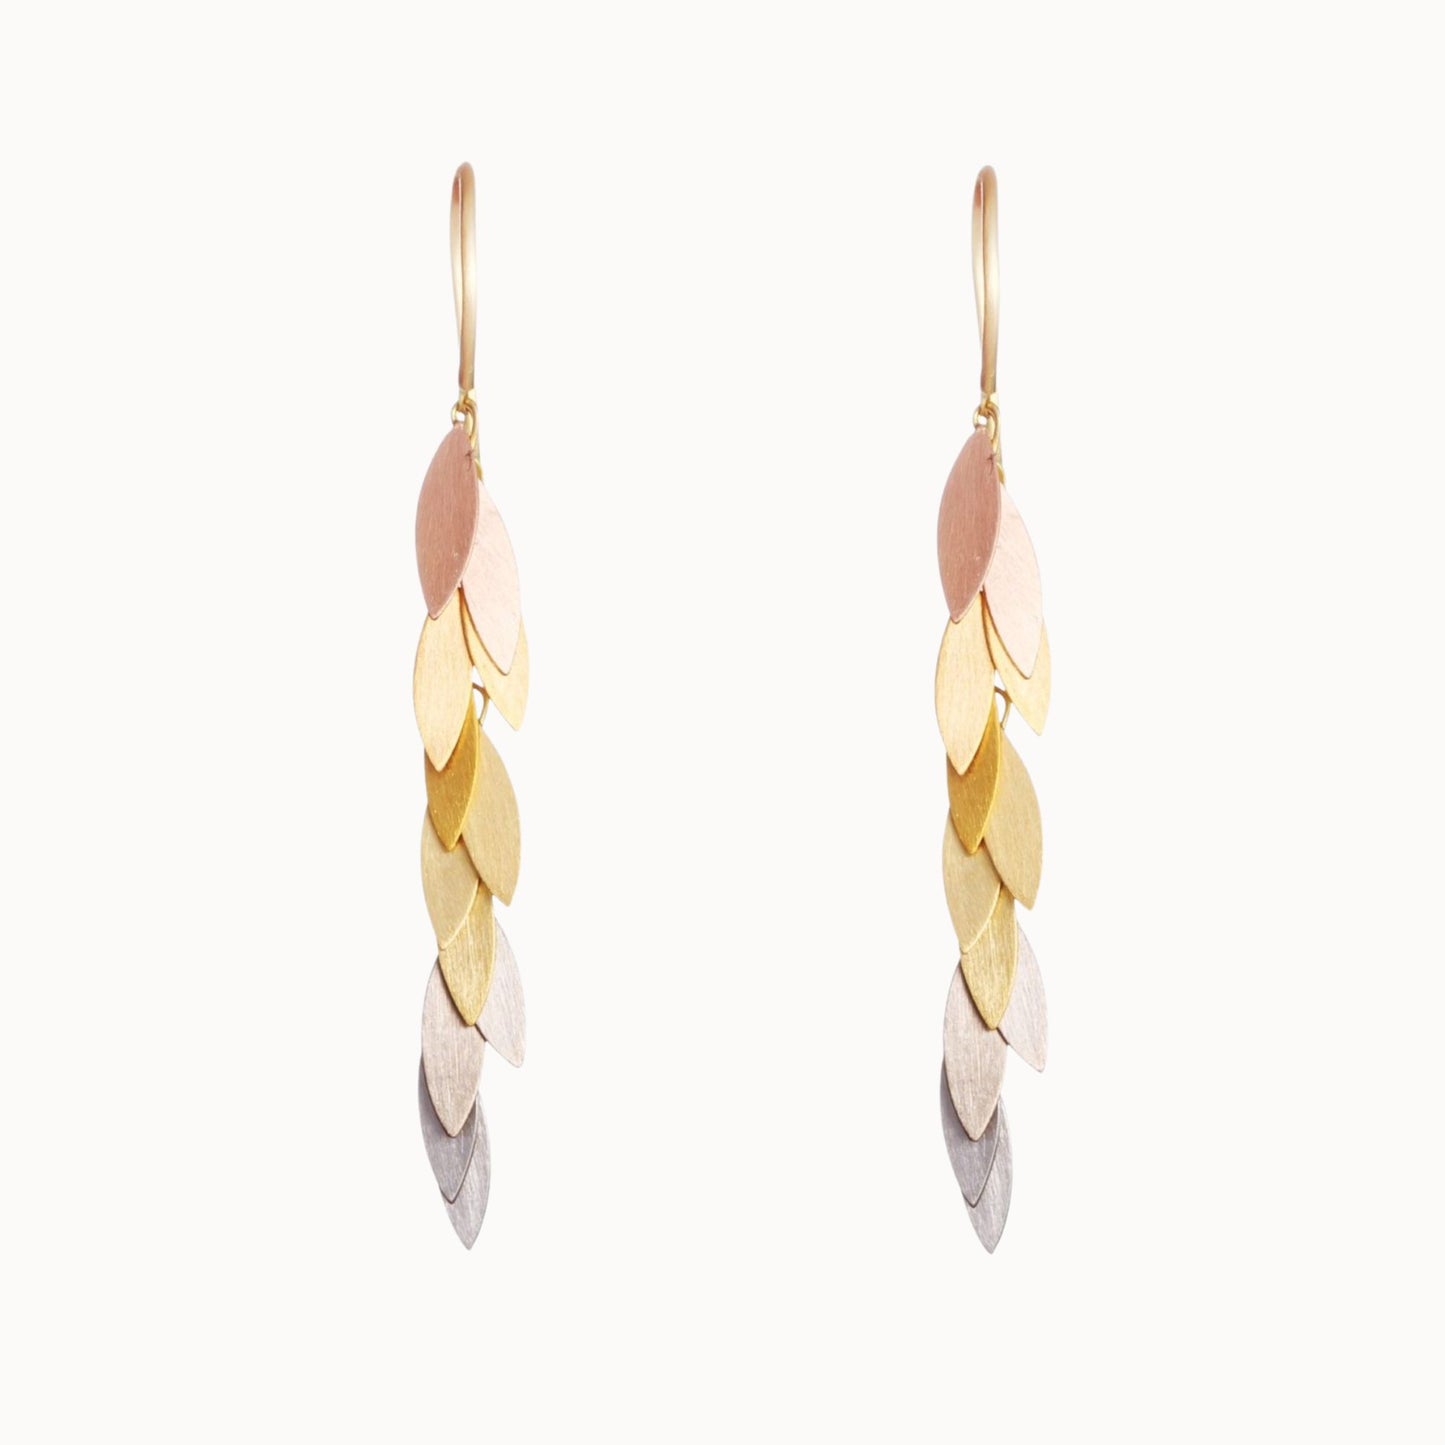 Sia Taylor 18K Rainbow Leaf Earrings